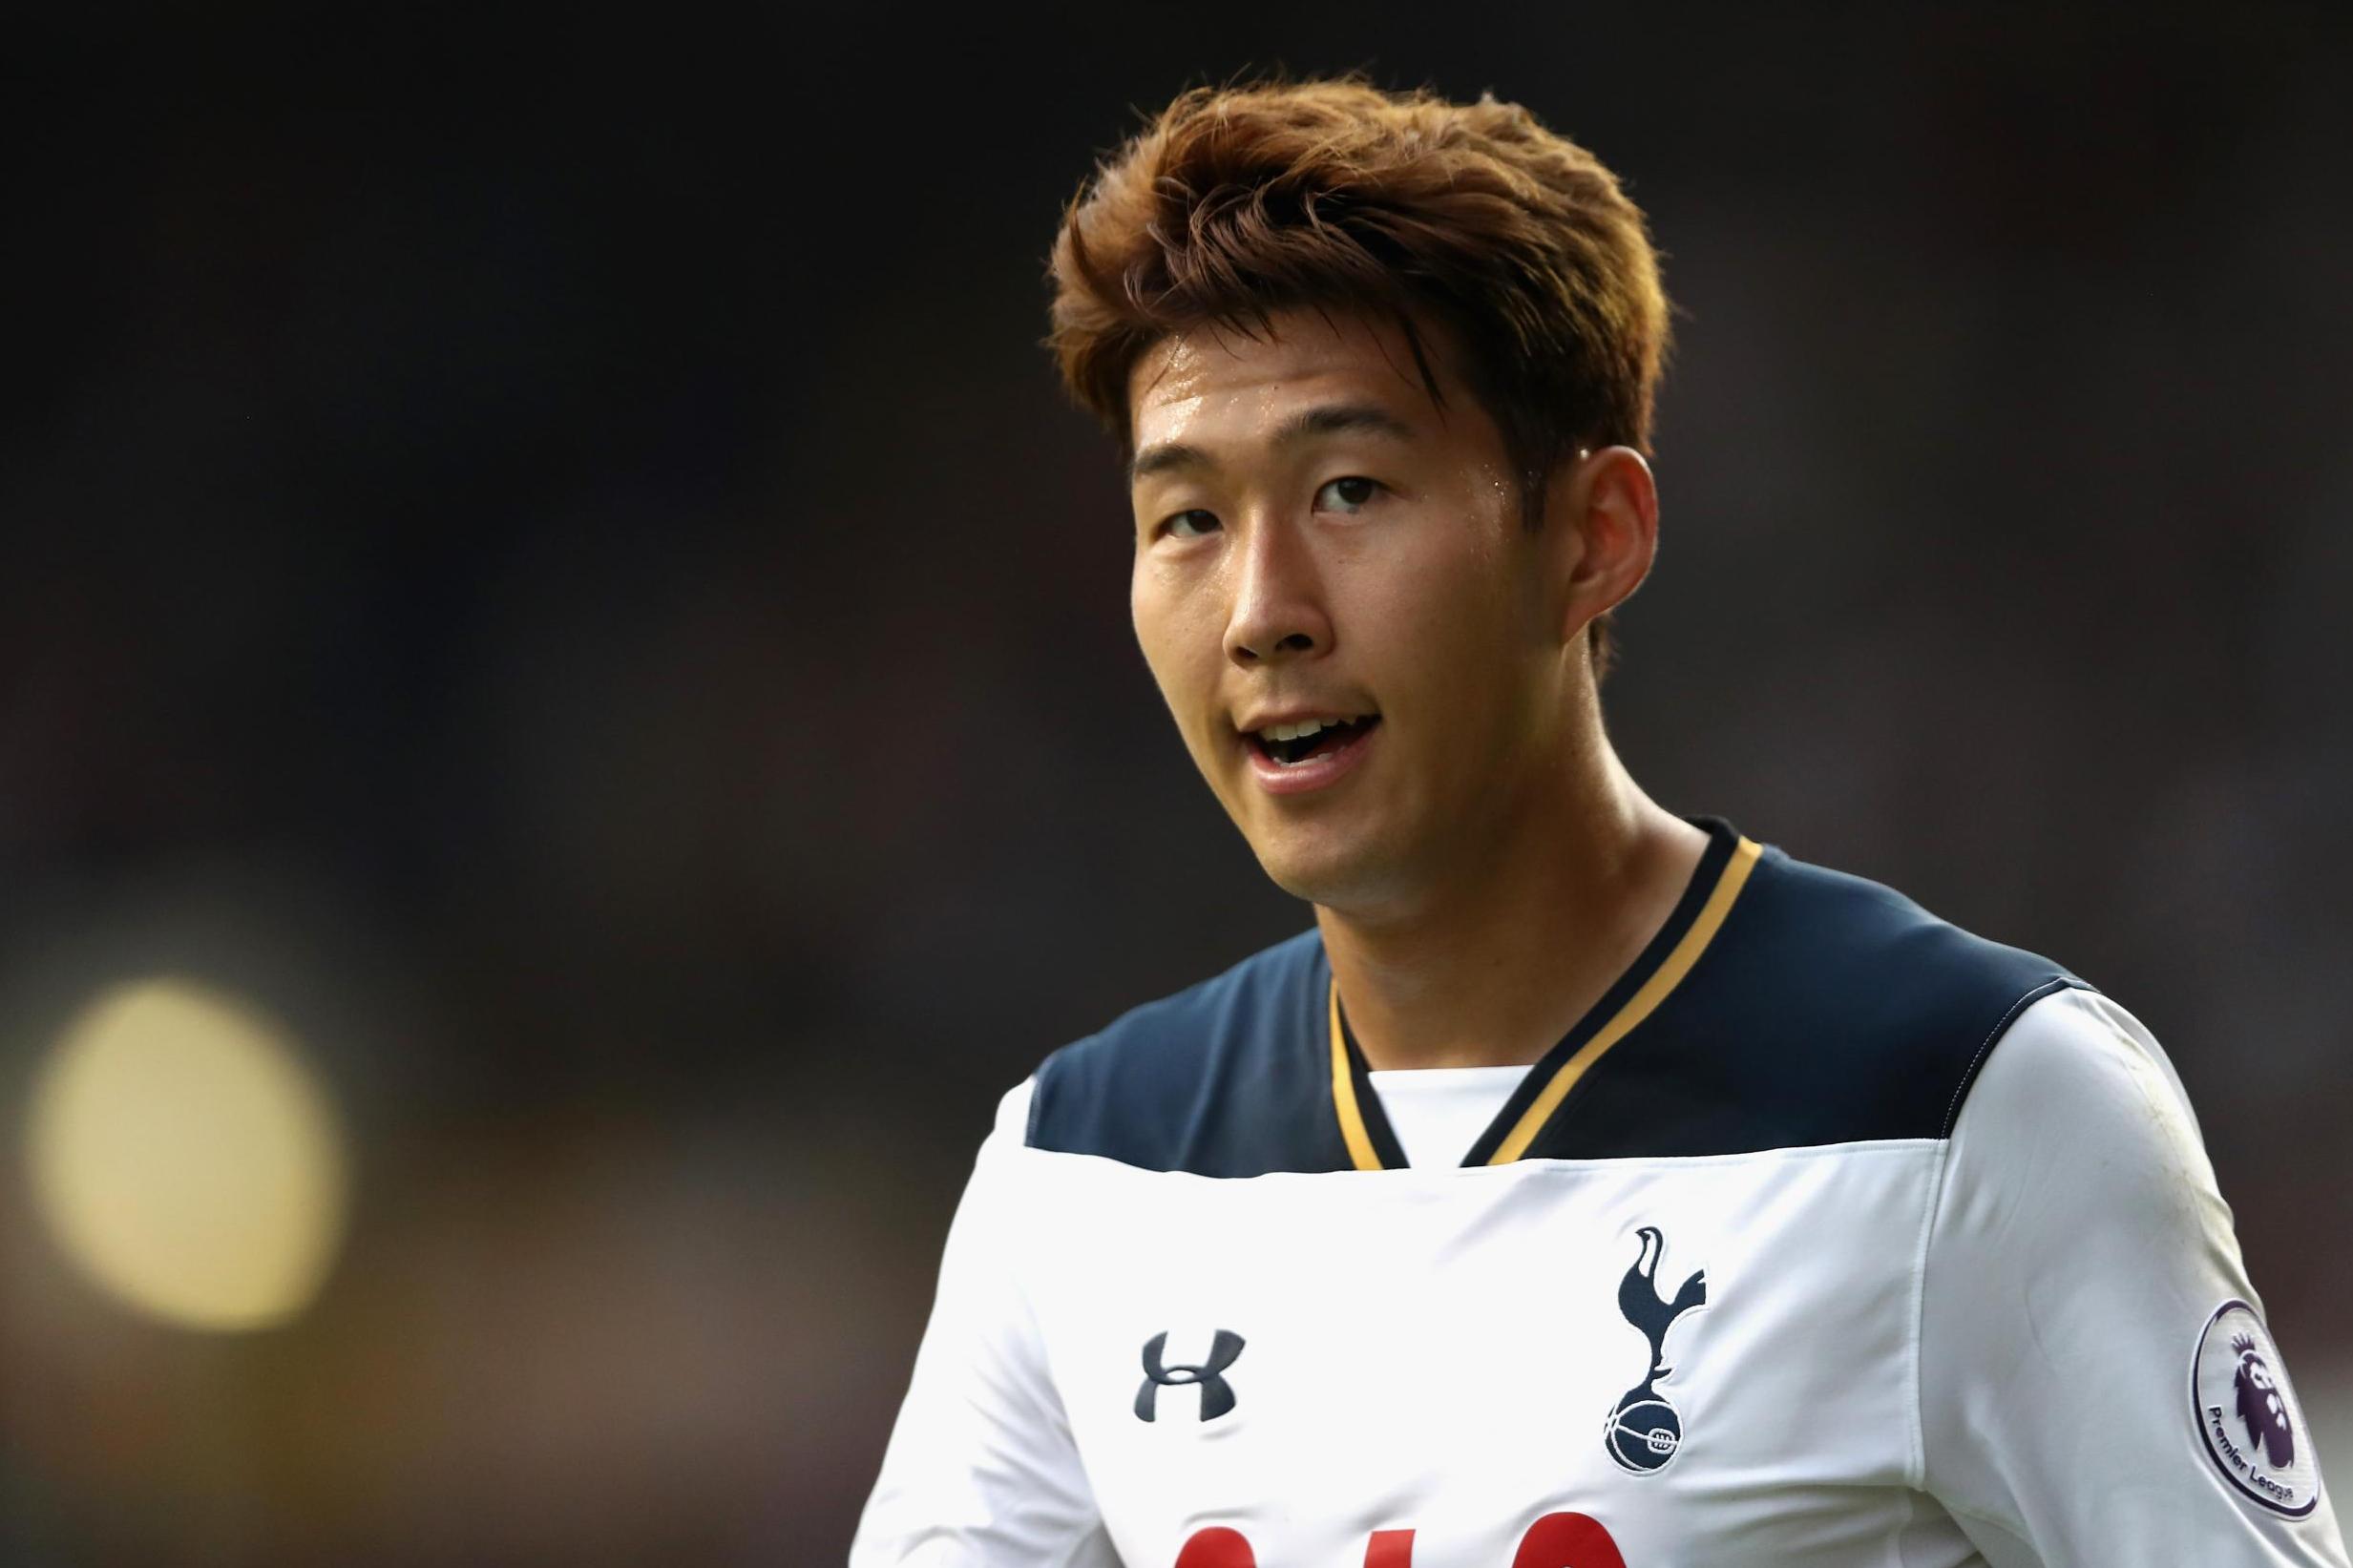 Son Heung Min (Korea Południowa / Tottenham Hotspurs)